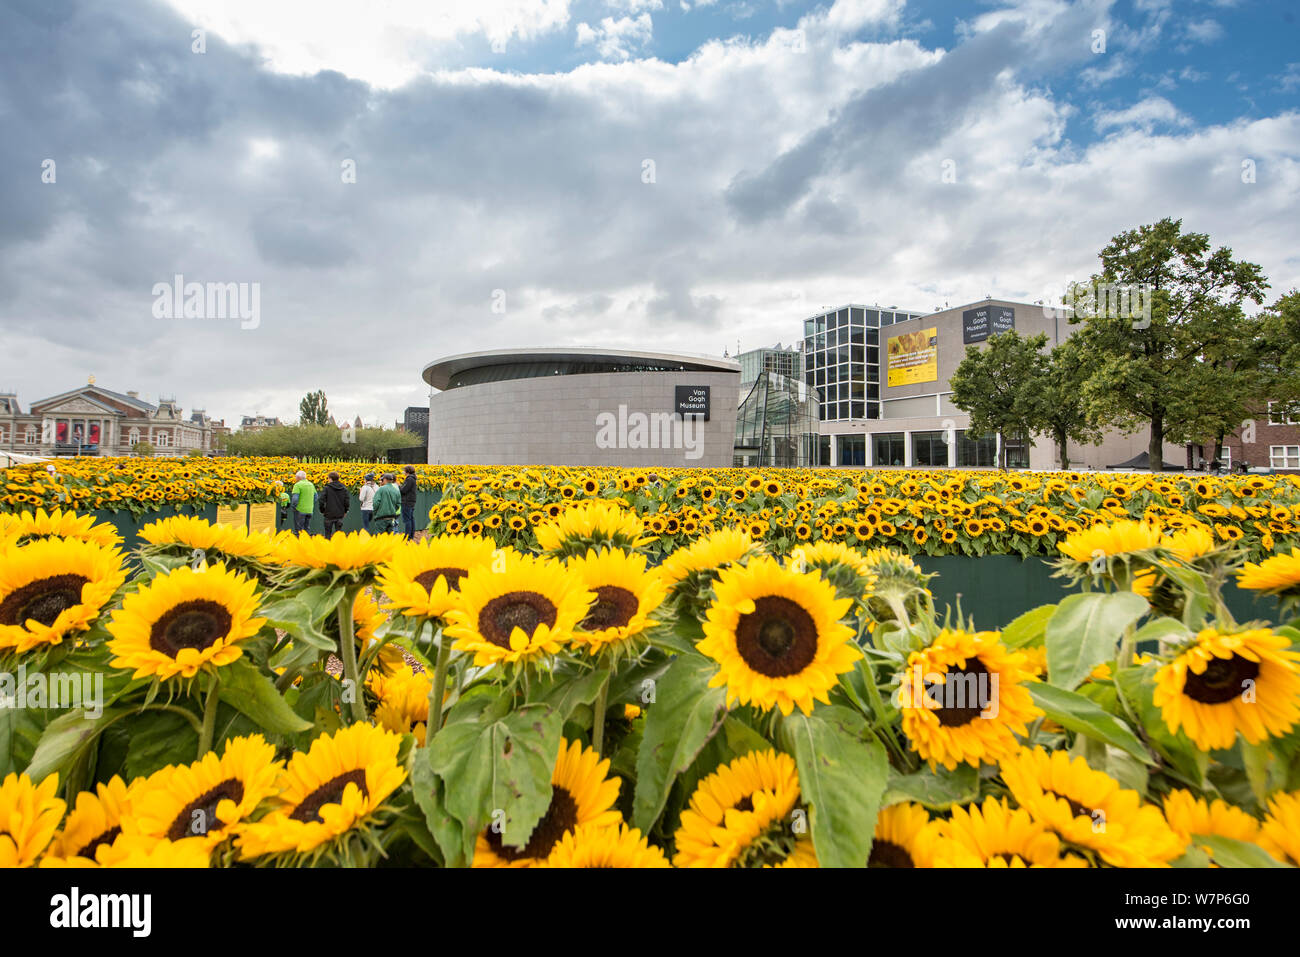 Sunflowers in the Van Gogh museum, Amsterdam Stock Photo - Alamy